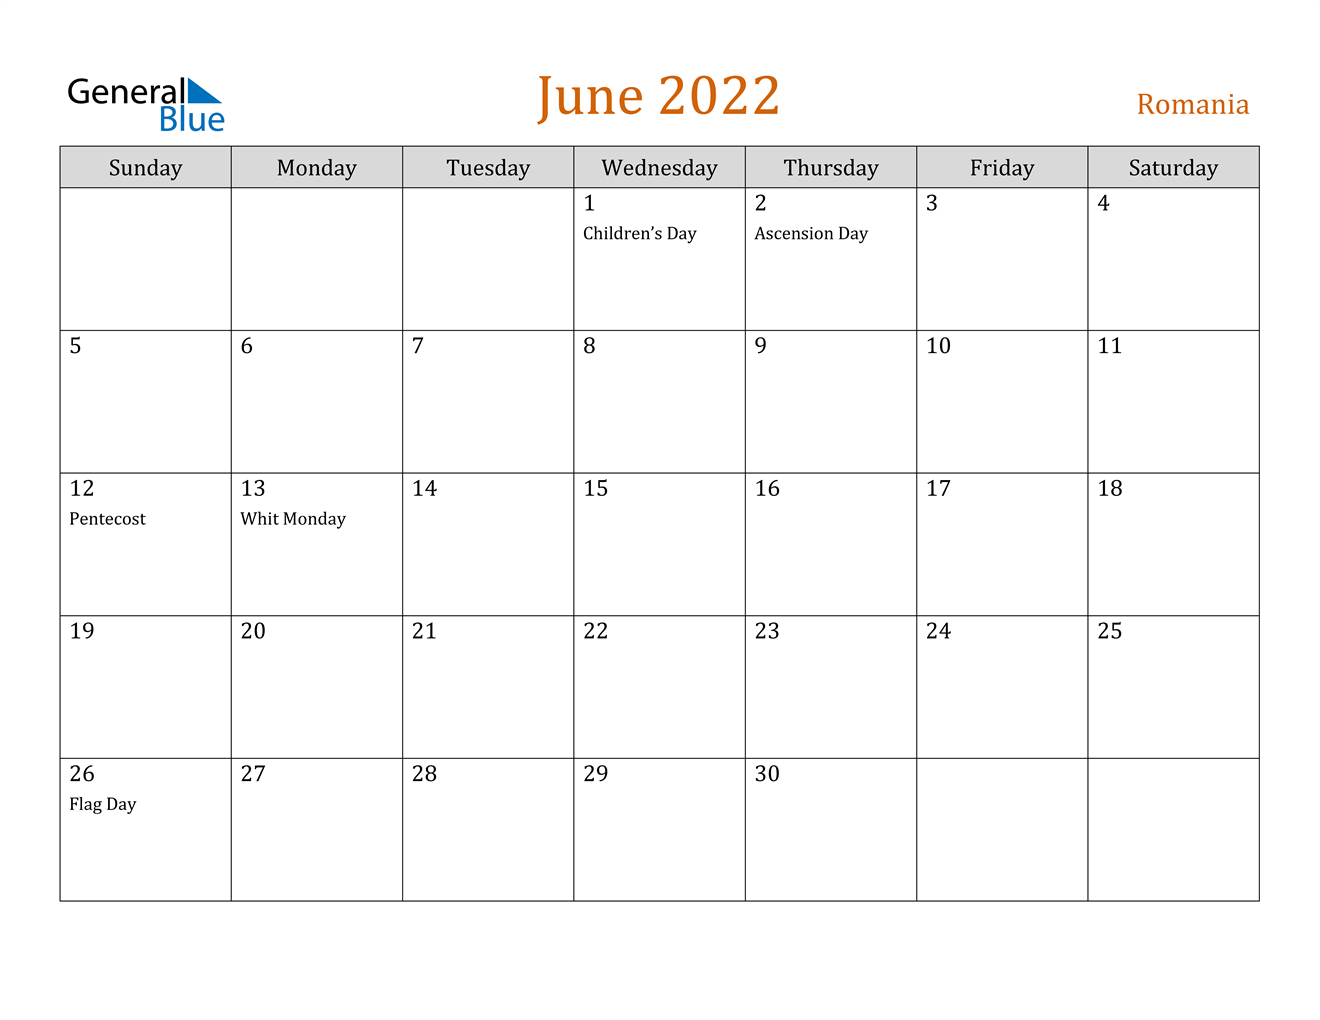 June 2022 Calendar - Romania